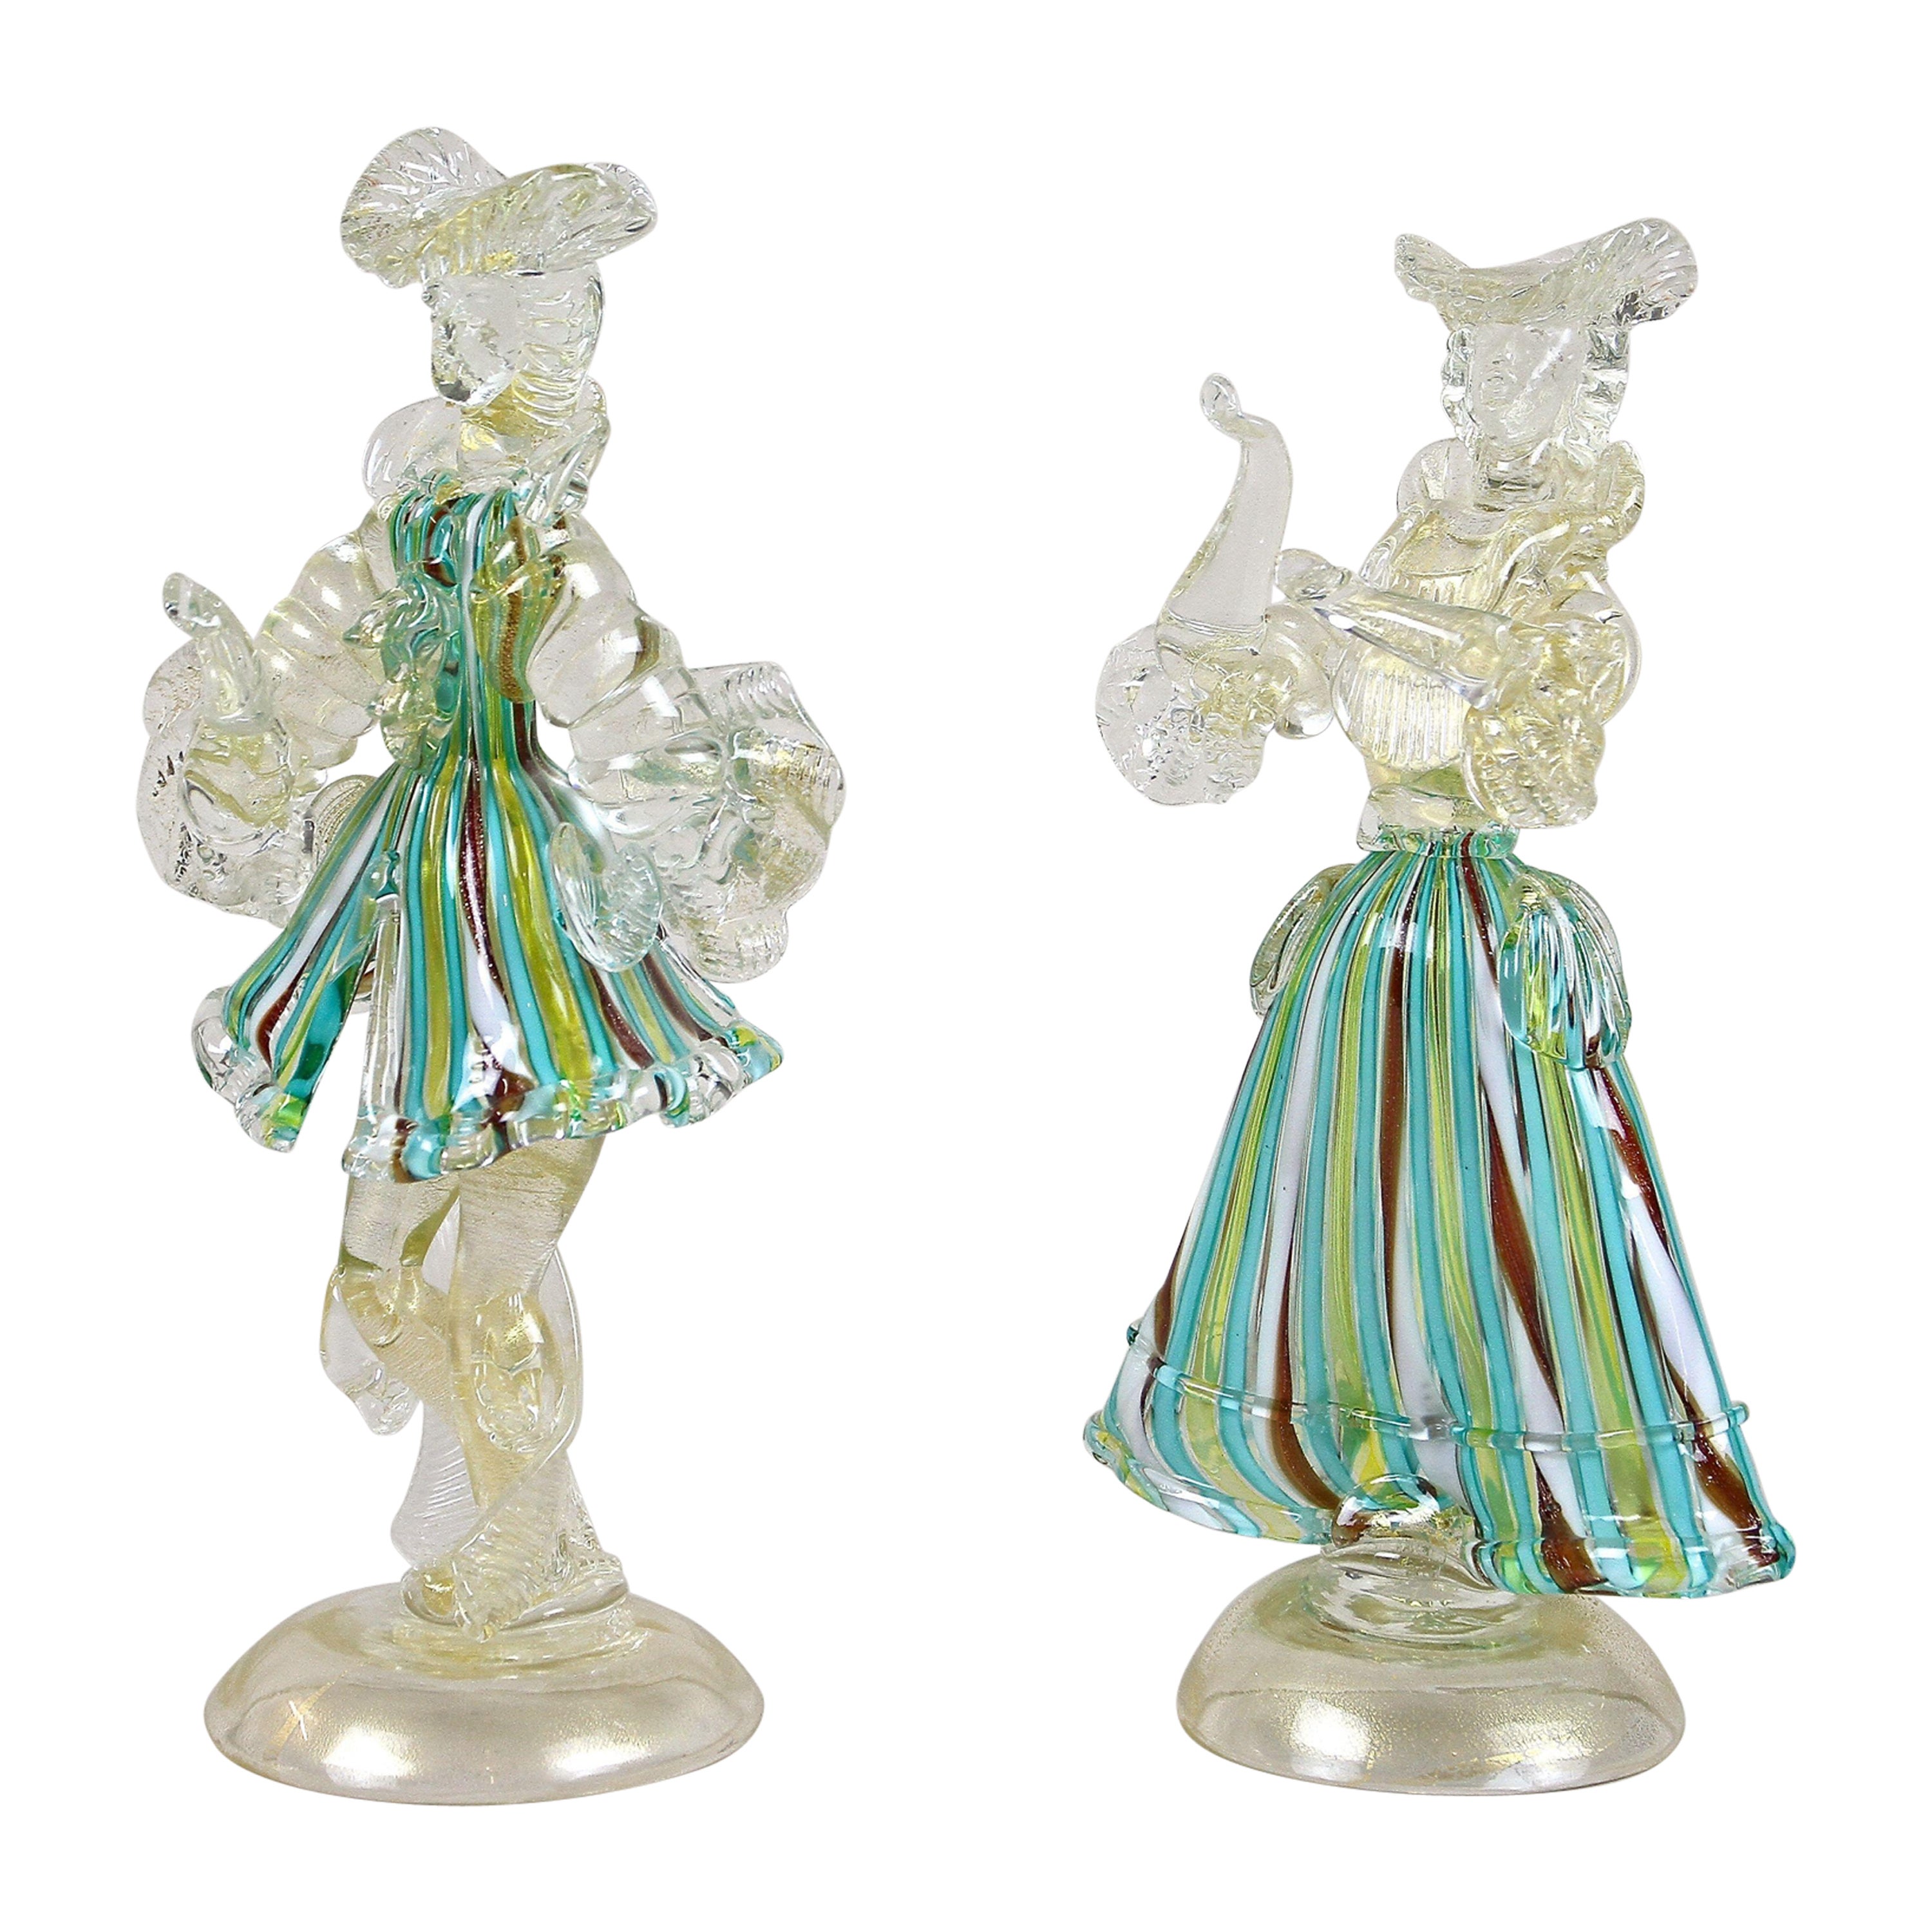 Pair of Colorful Gilt Murano Glass Figurines, Italy, circa 1950